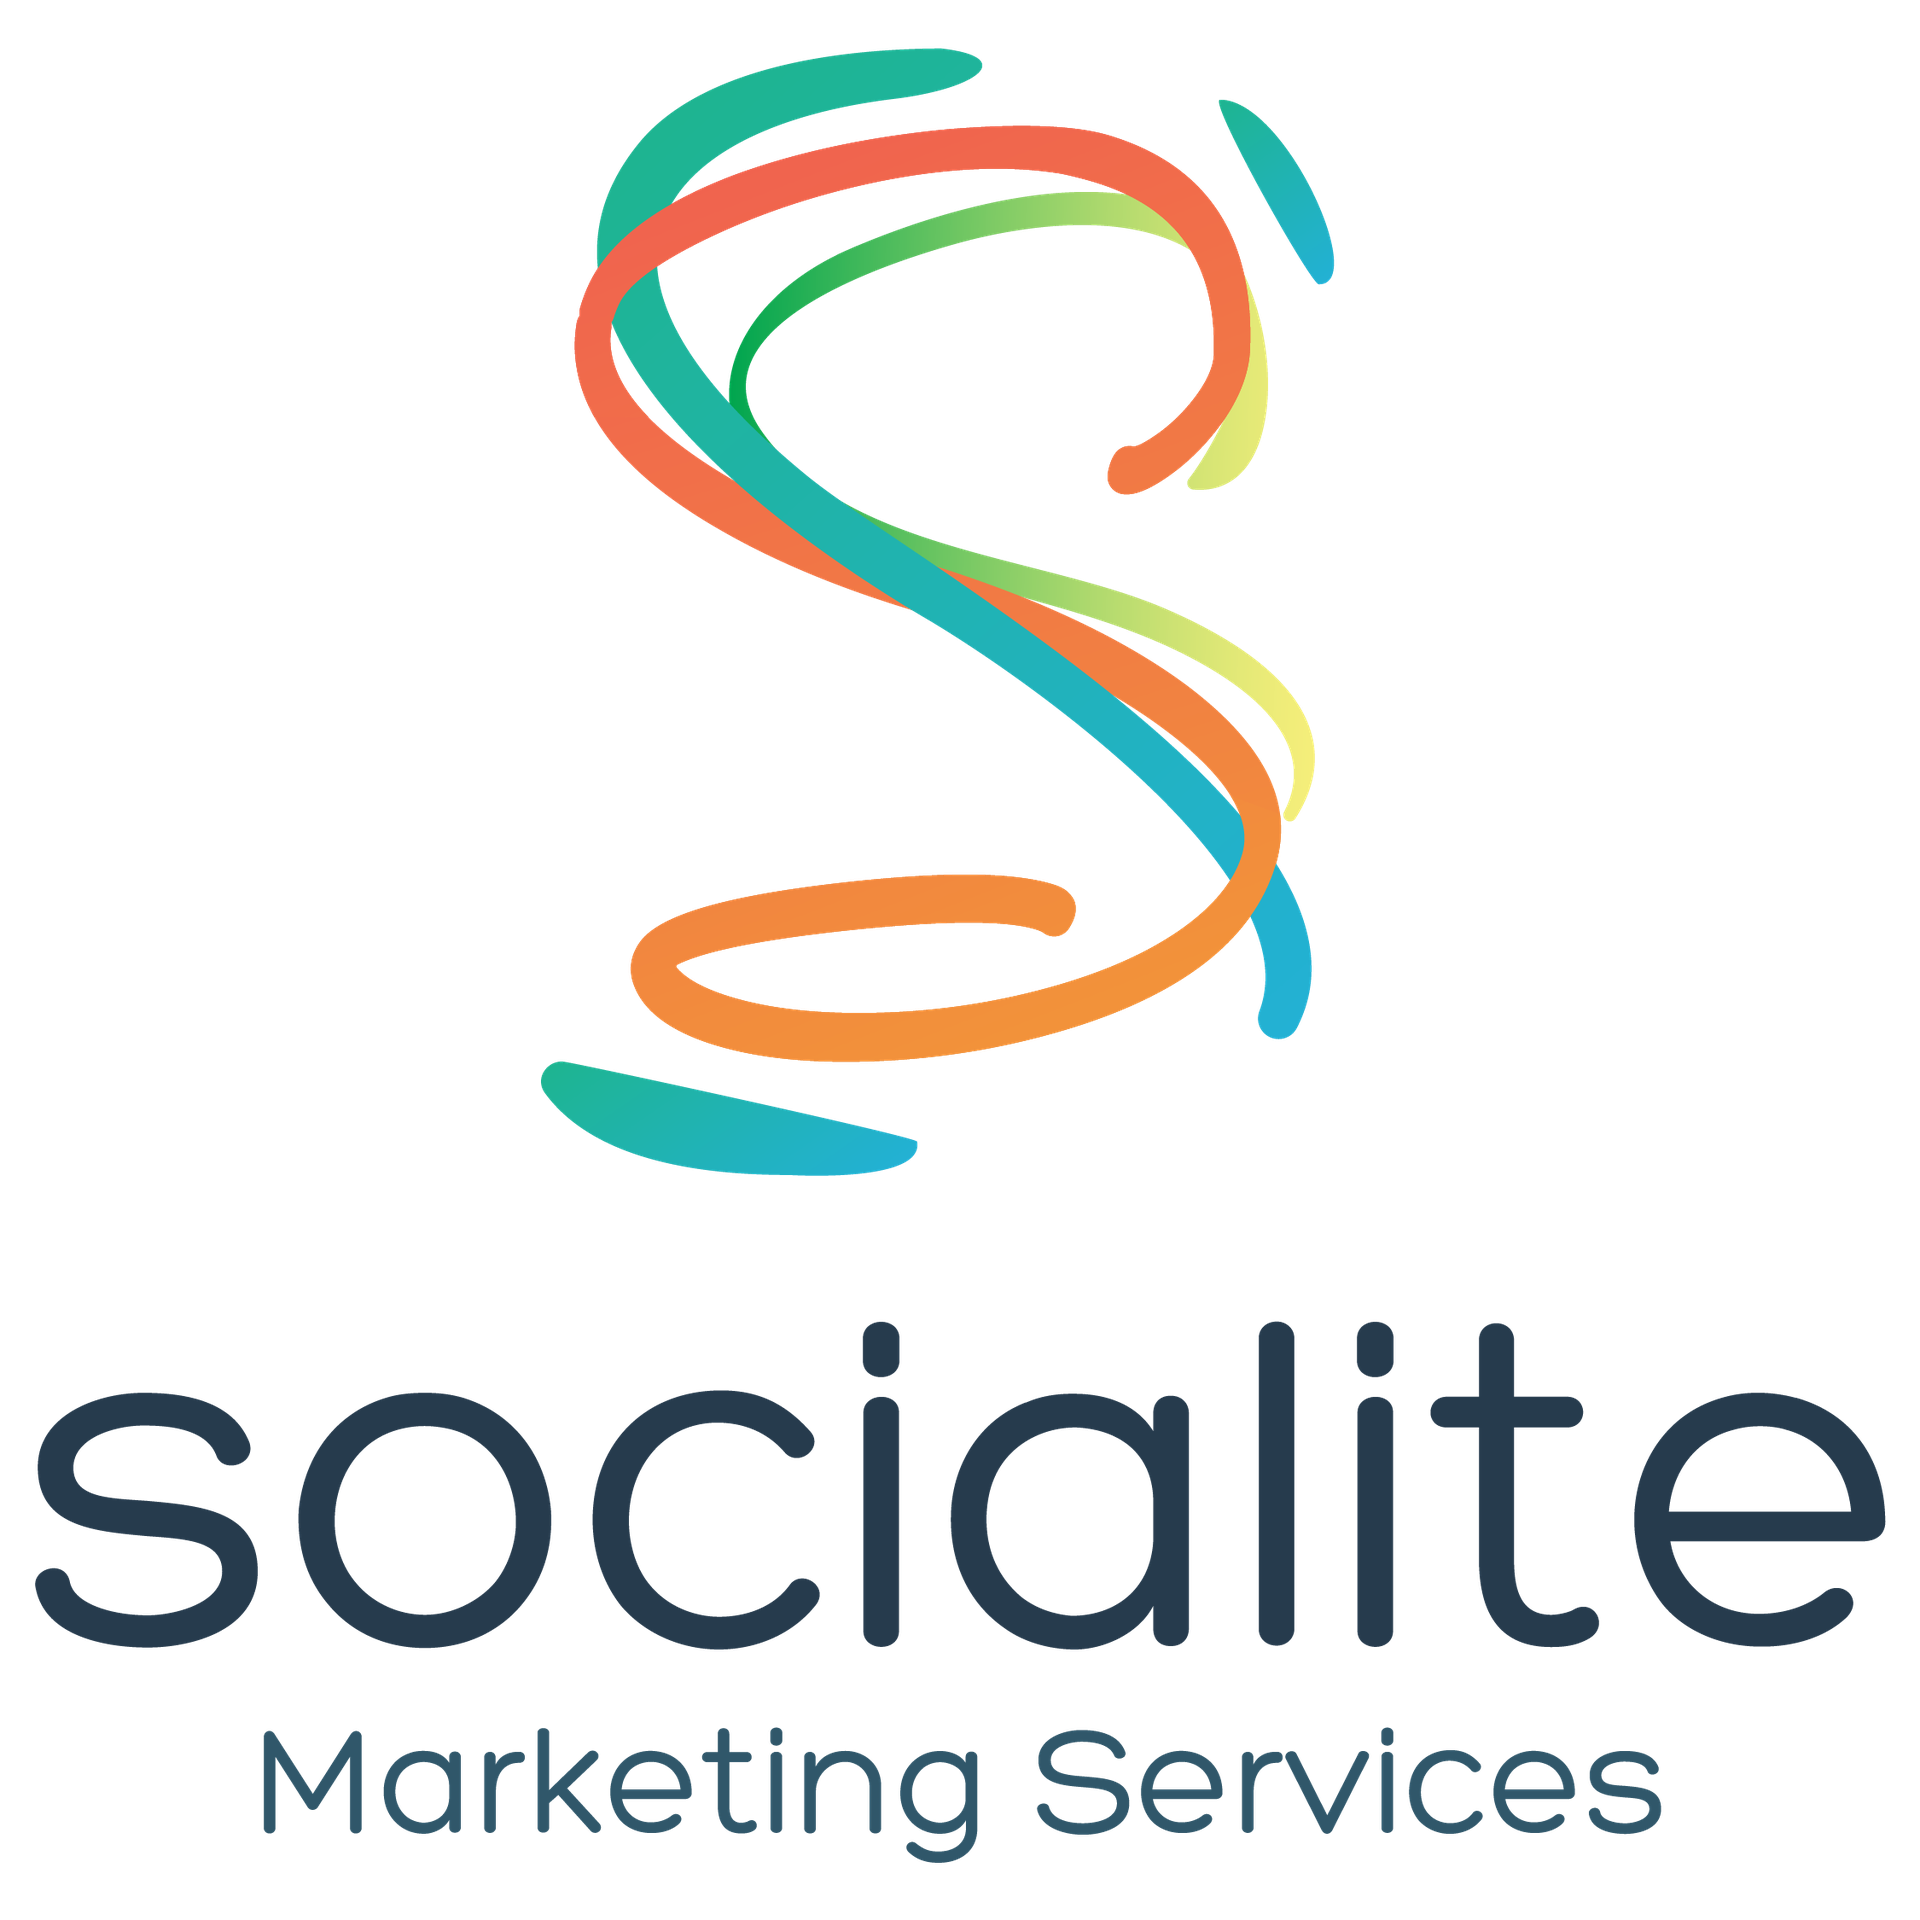 Socialite Marketing Services